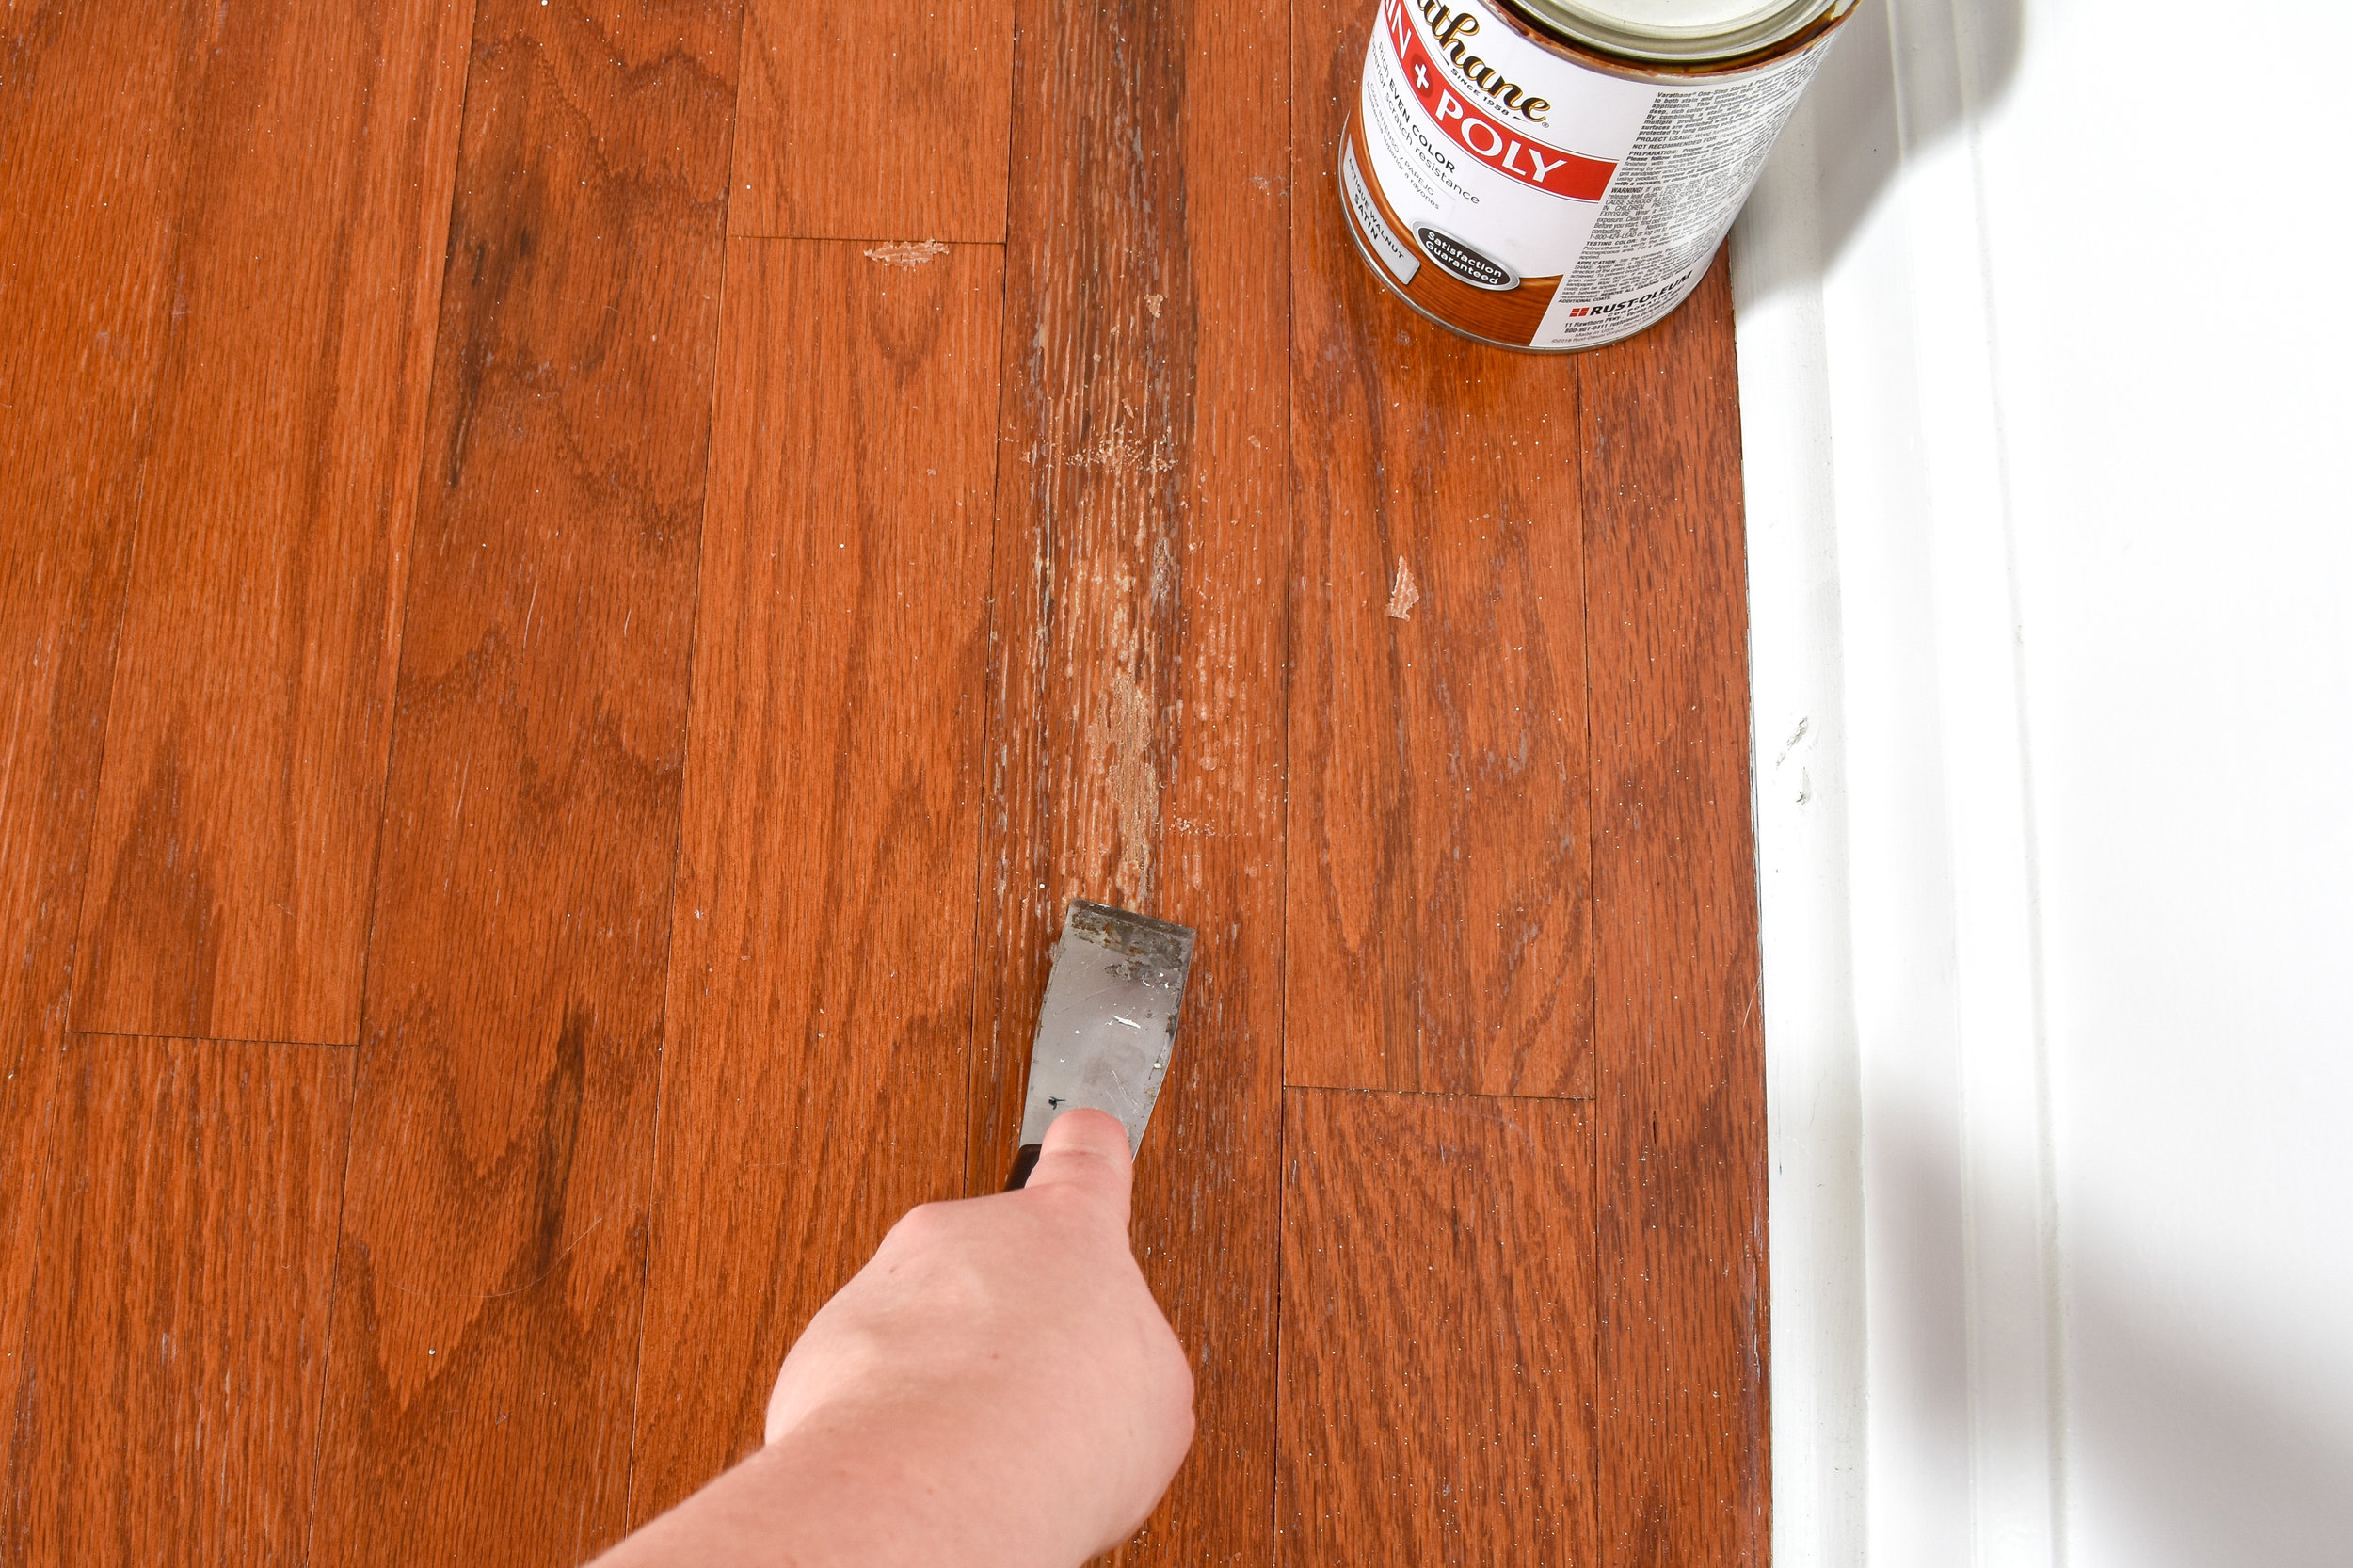 How To Make Old Hardwood Floors Shine, Cleaning Heavily Soiled Hardwood Floors